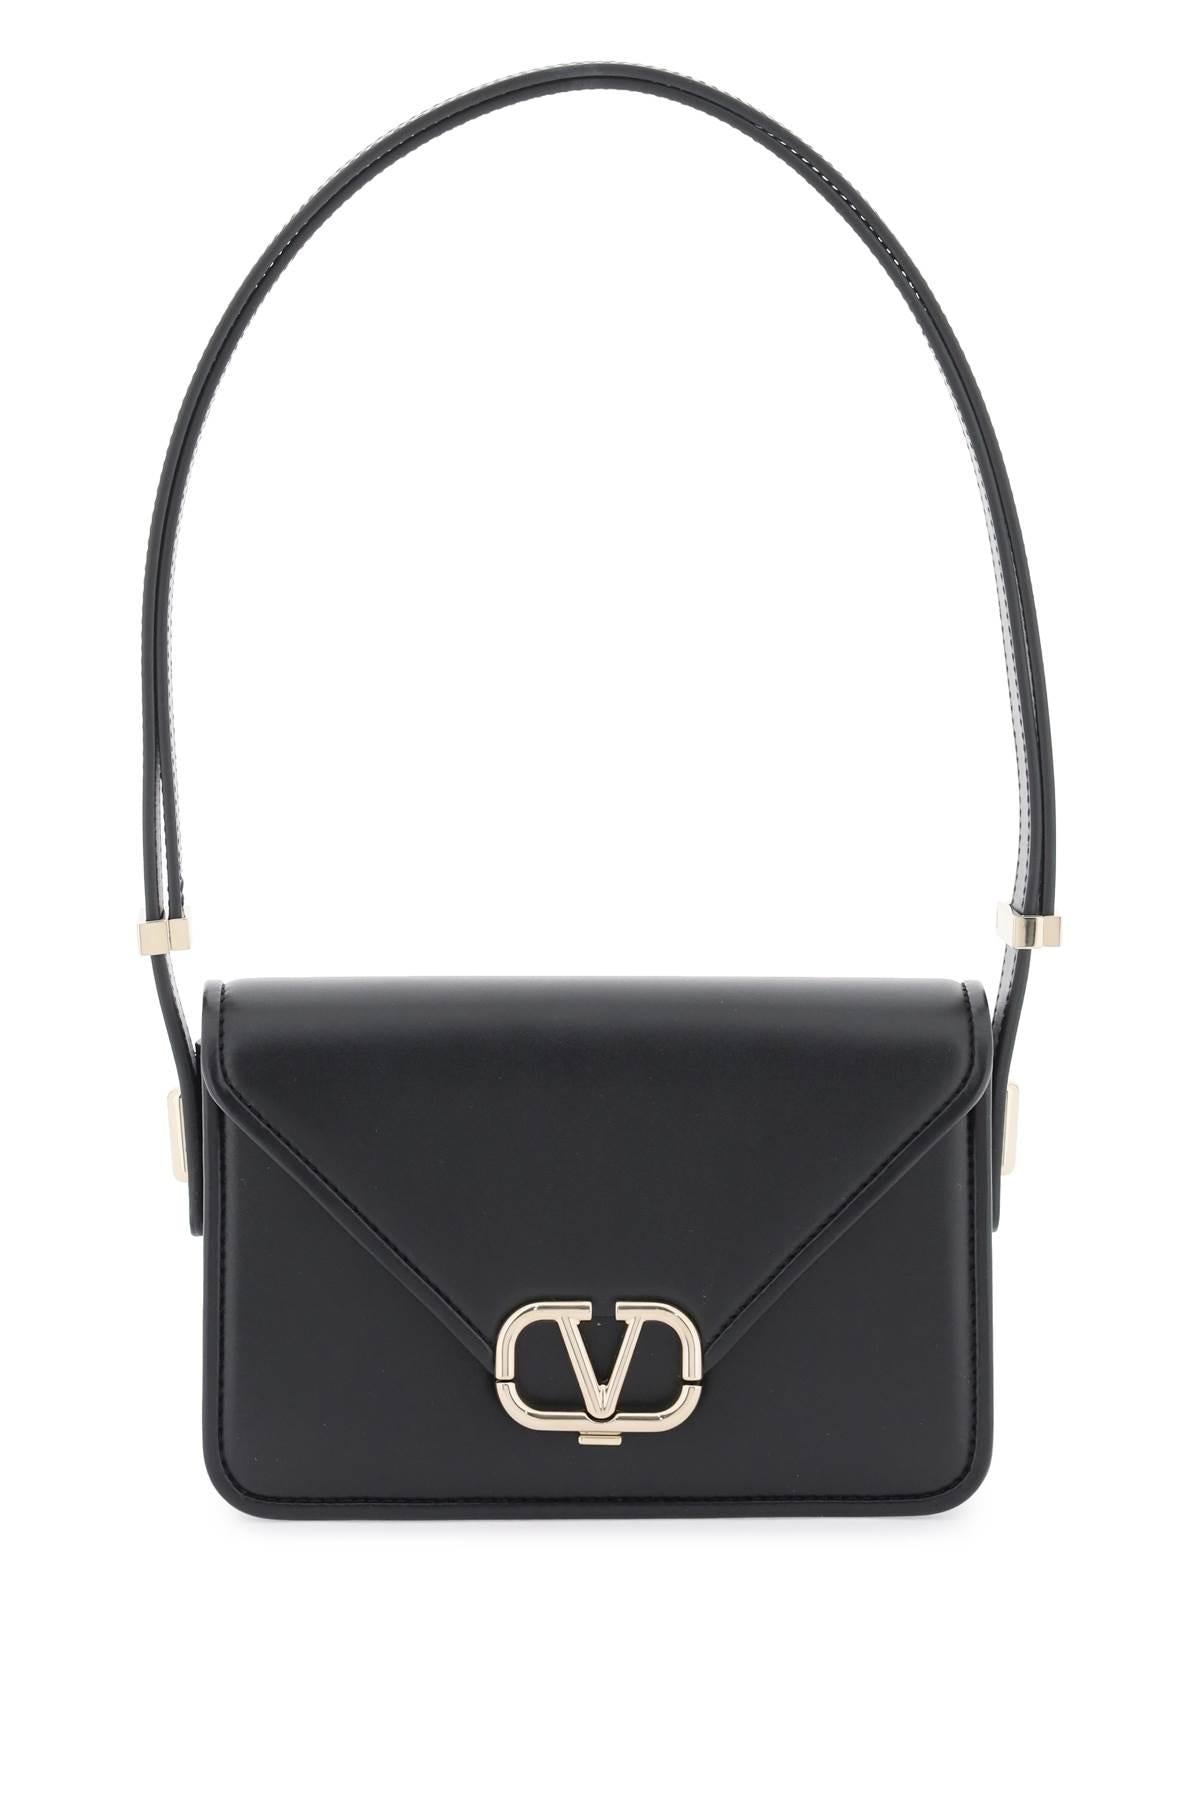 Valentino Garavani Small Letter Leather Shoulder Bag